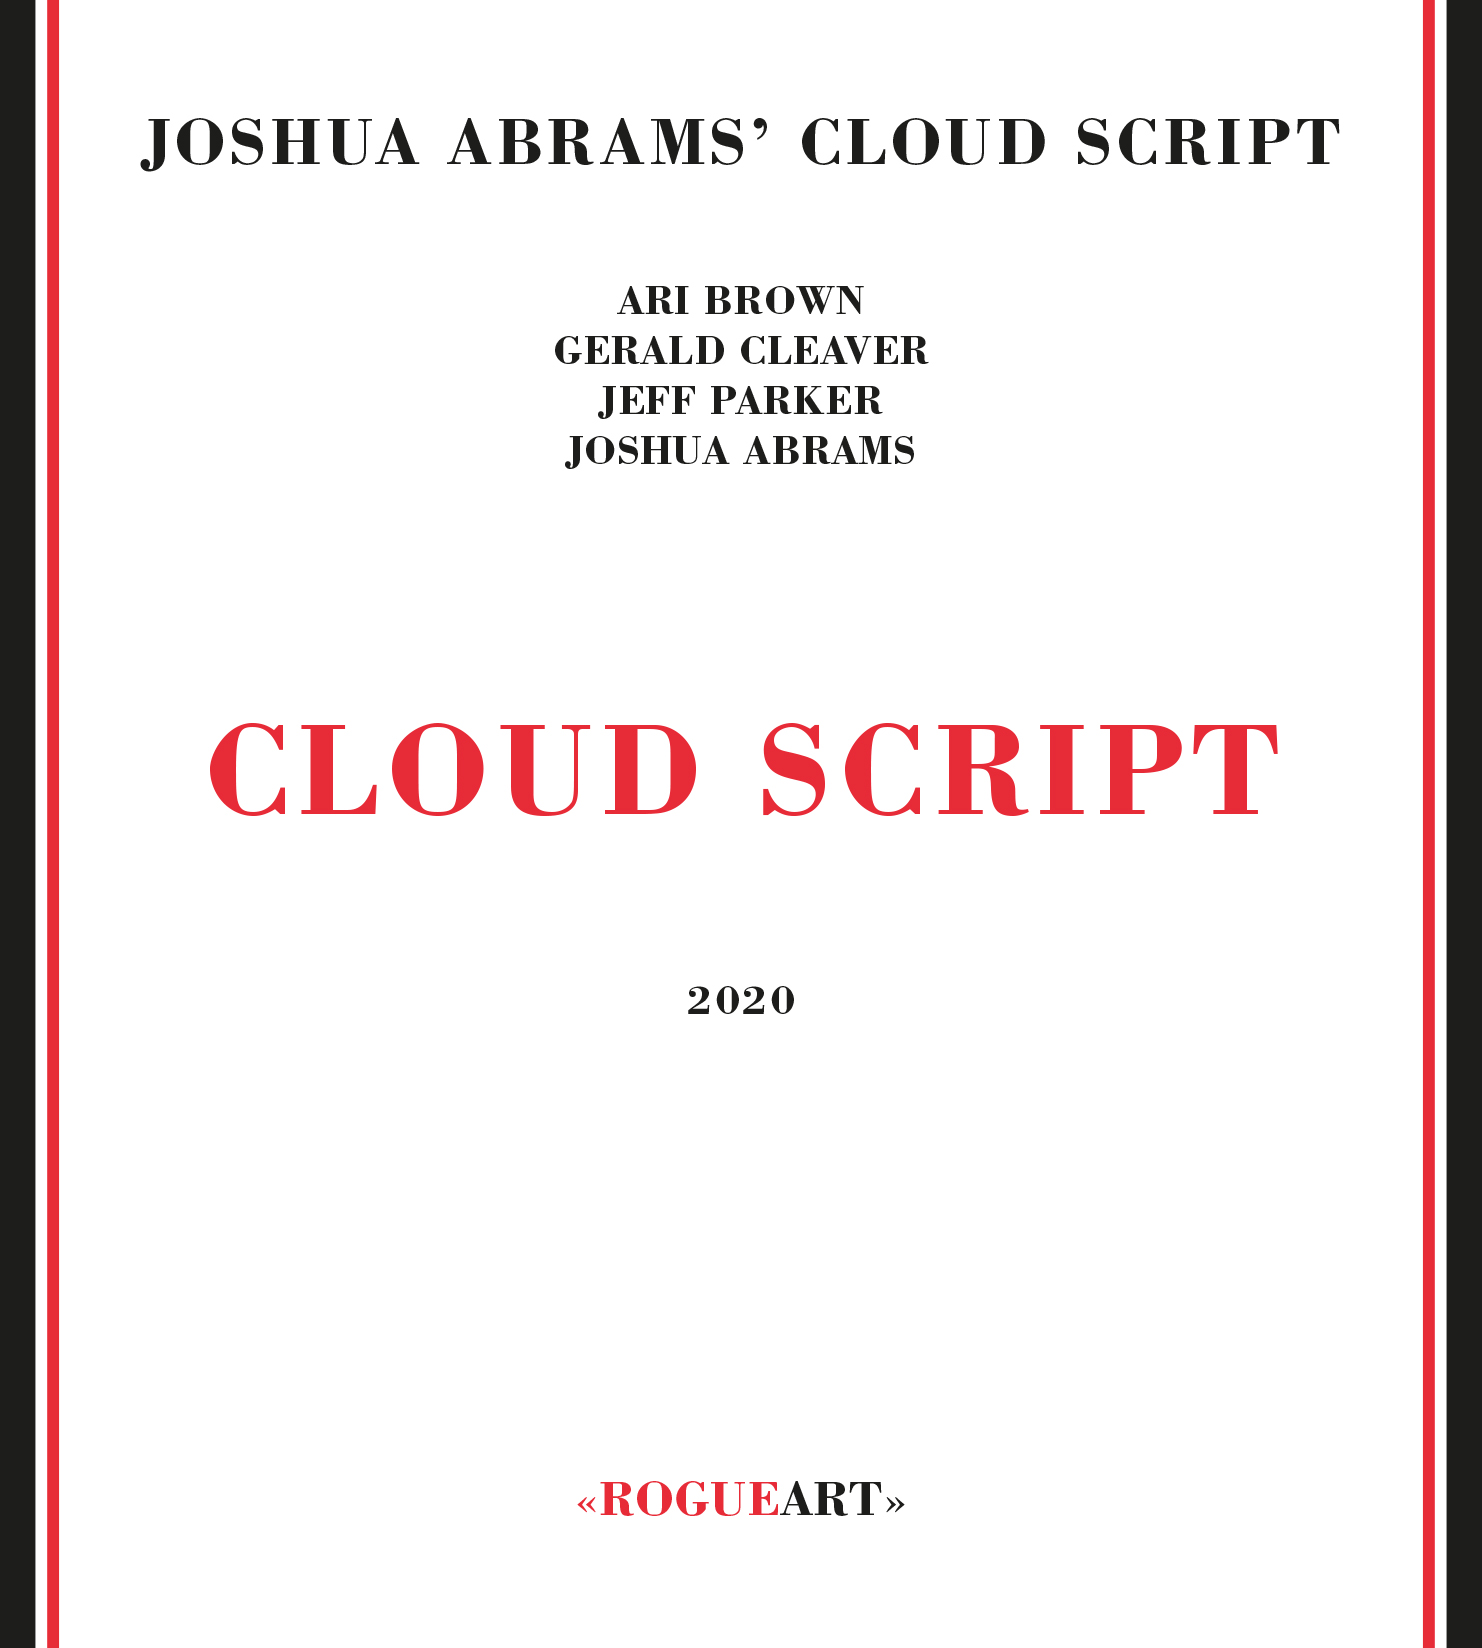 JOSHUA ABRAMS - Cloud Script cover 